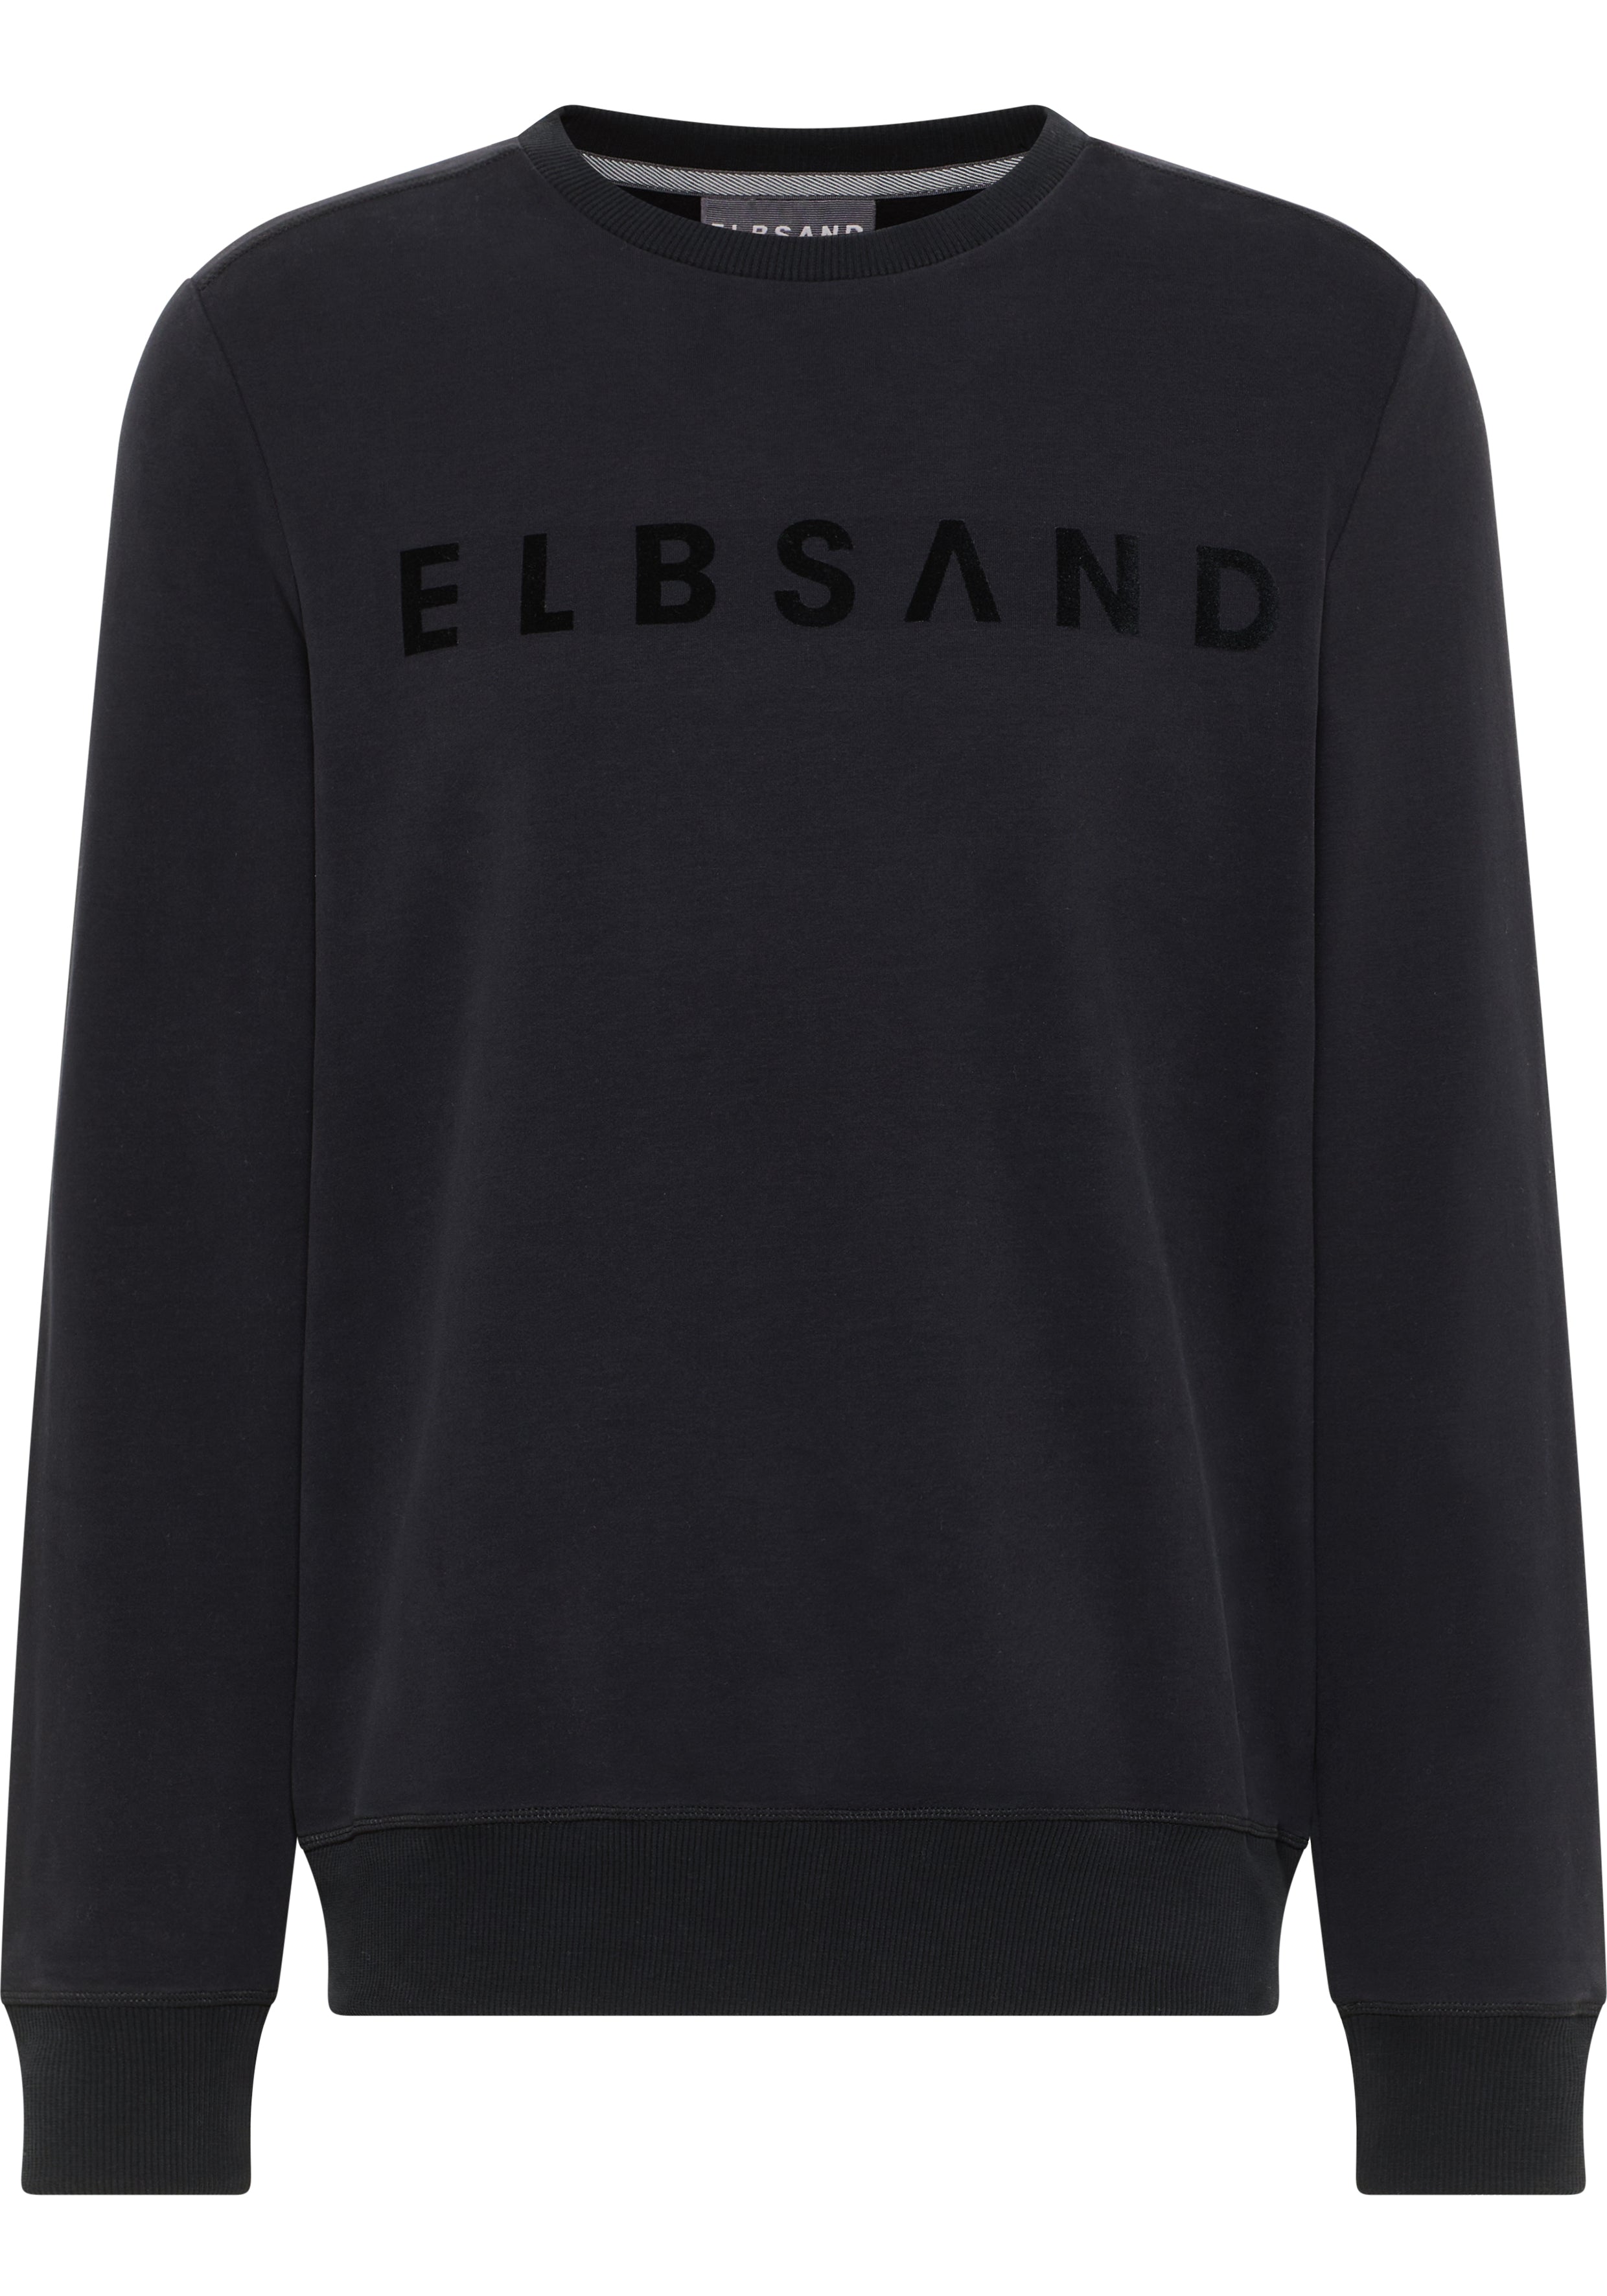 Elbsand | Sweatshirt - Jarku | 990 caviar